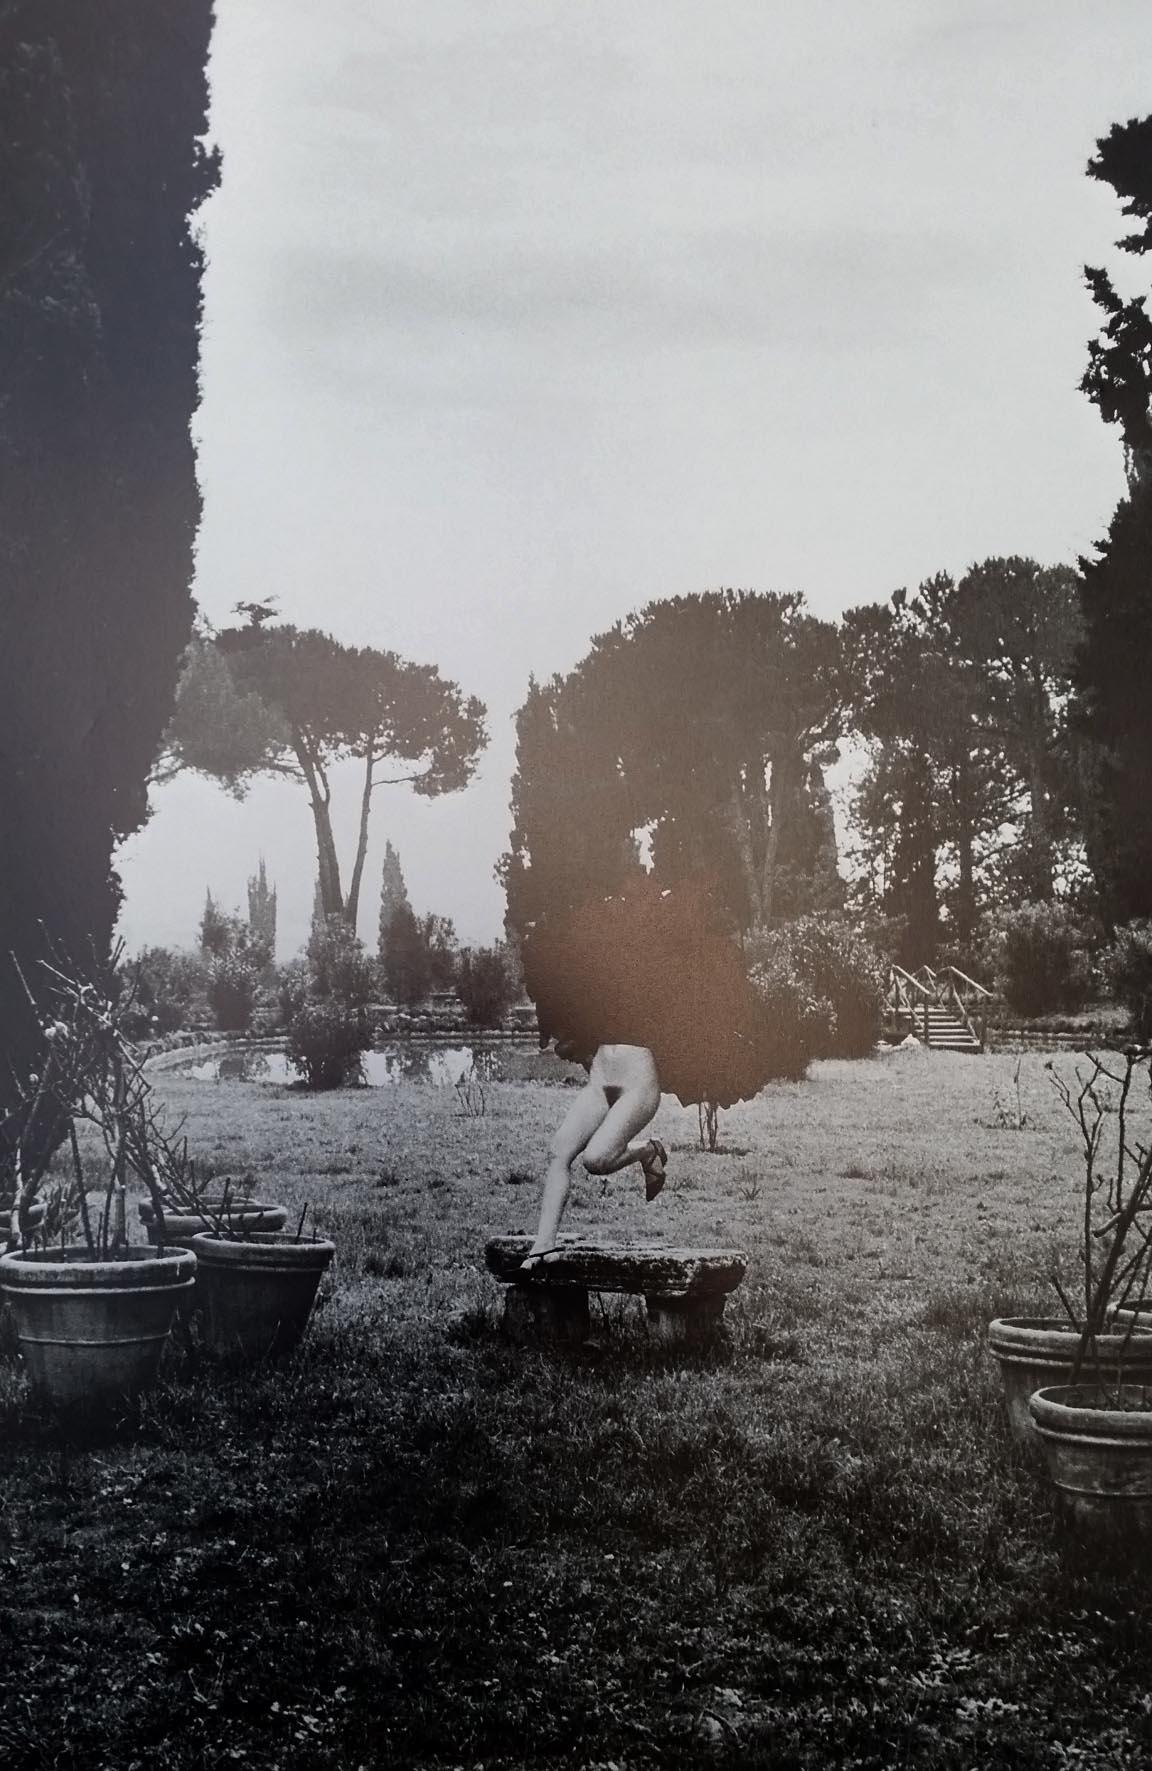 In a garden near Rome  - Photograph by Helmut Newton